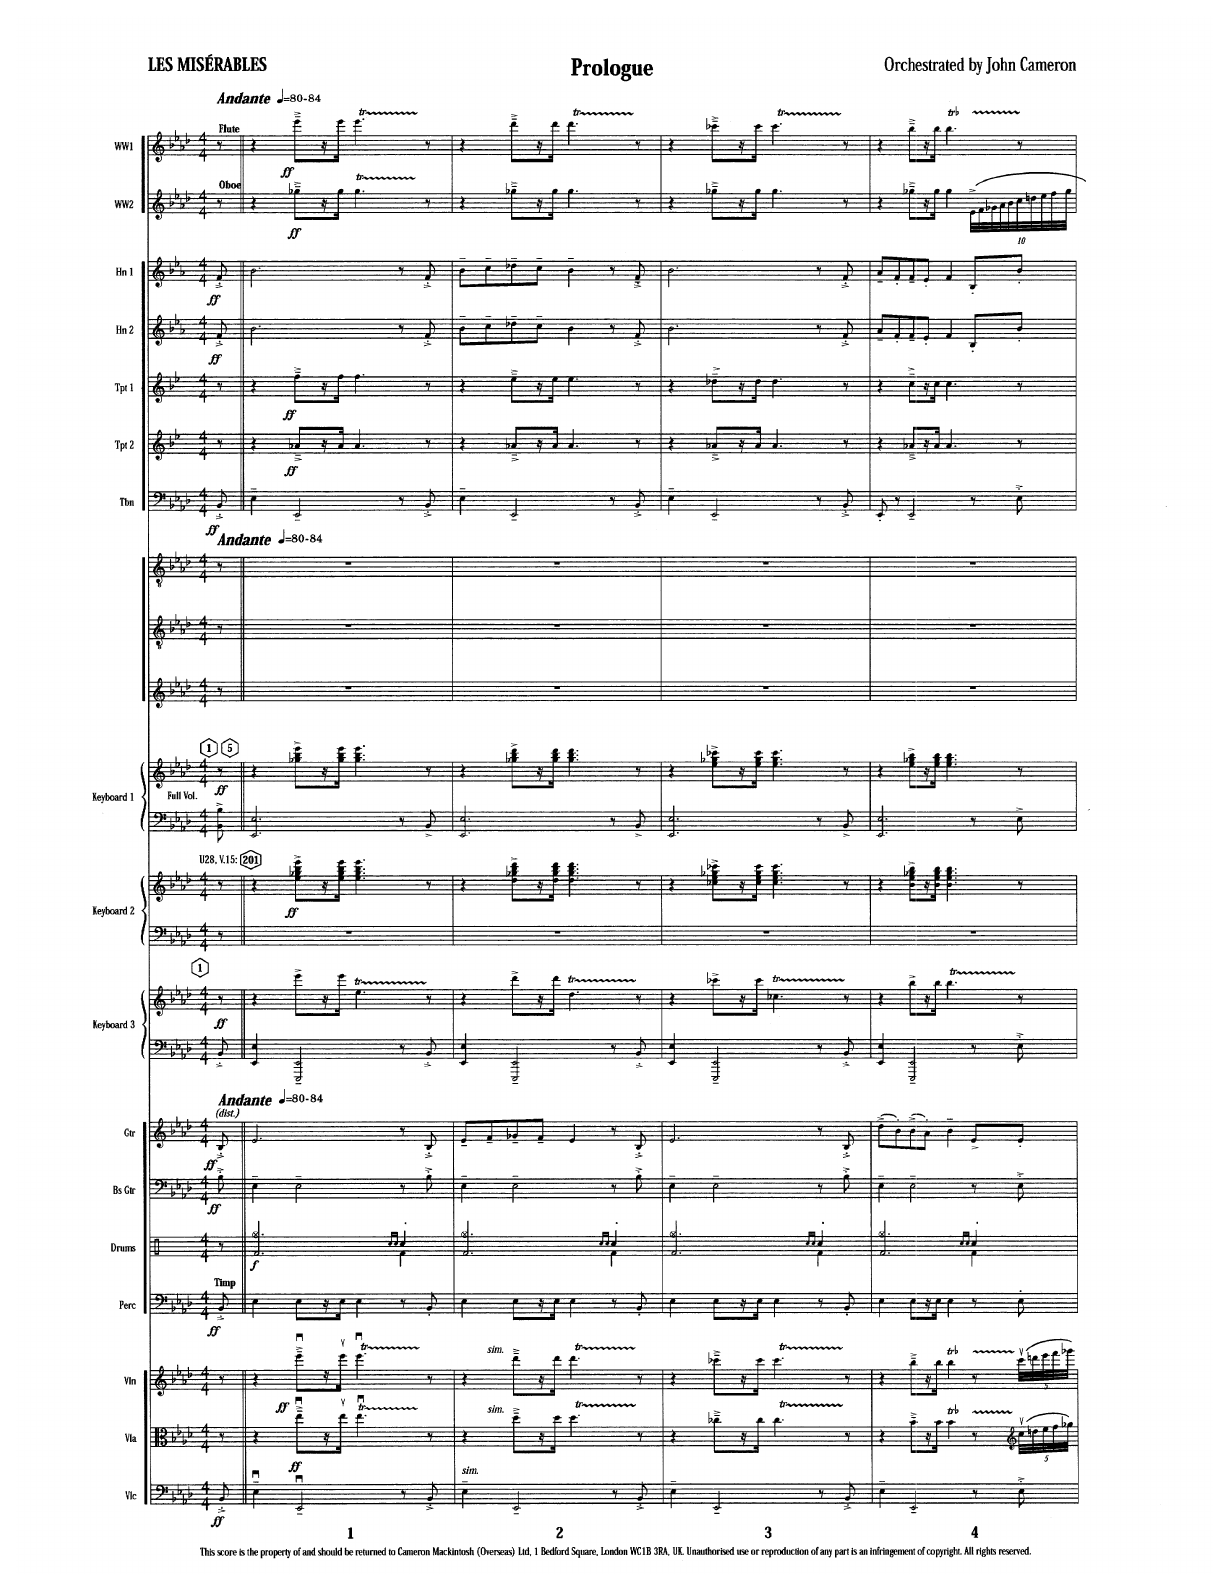 les miserables full orchestral score pdf